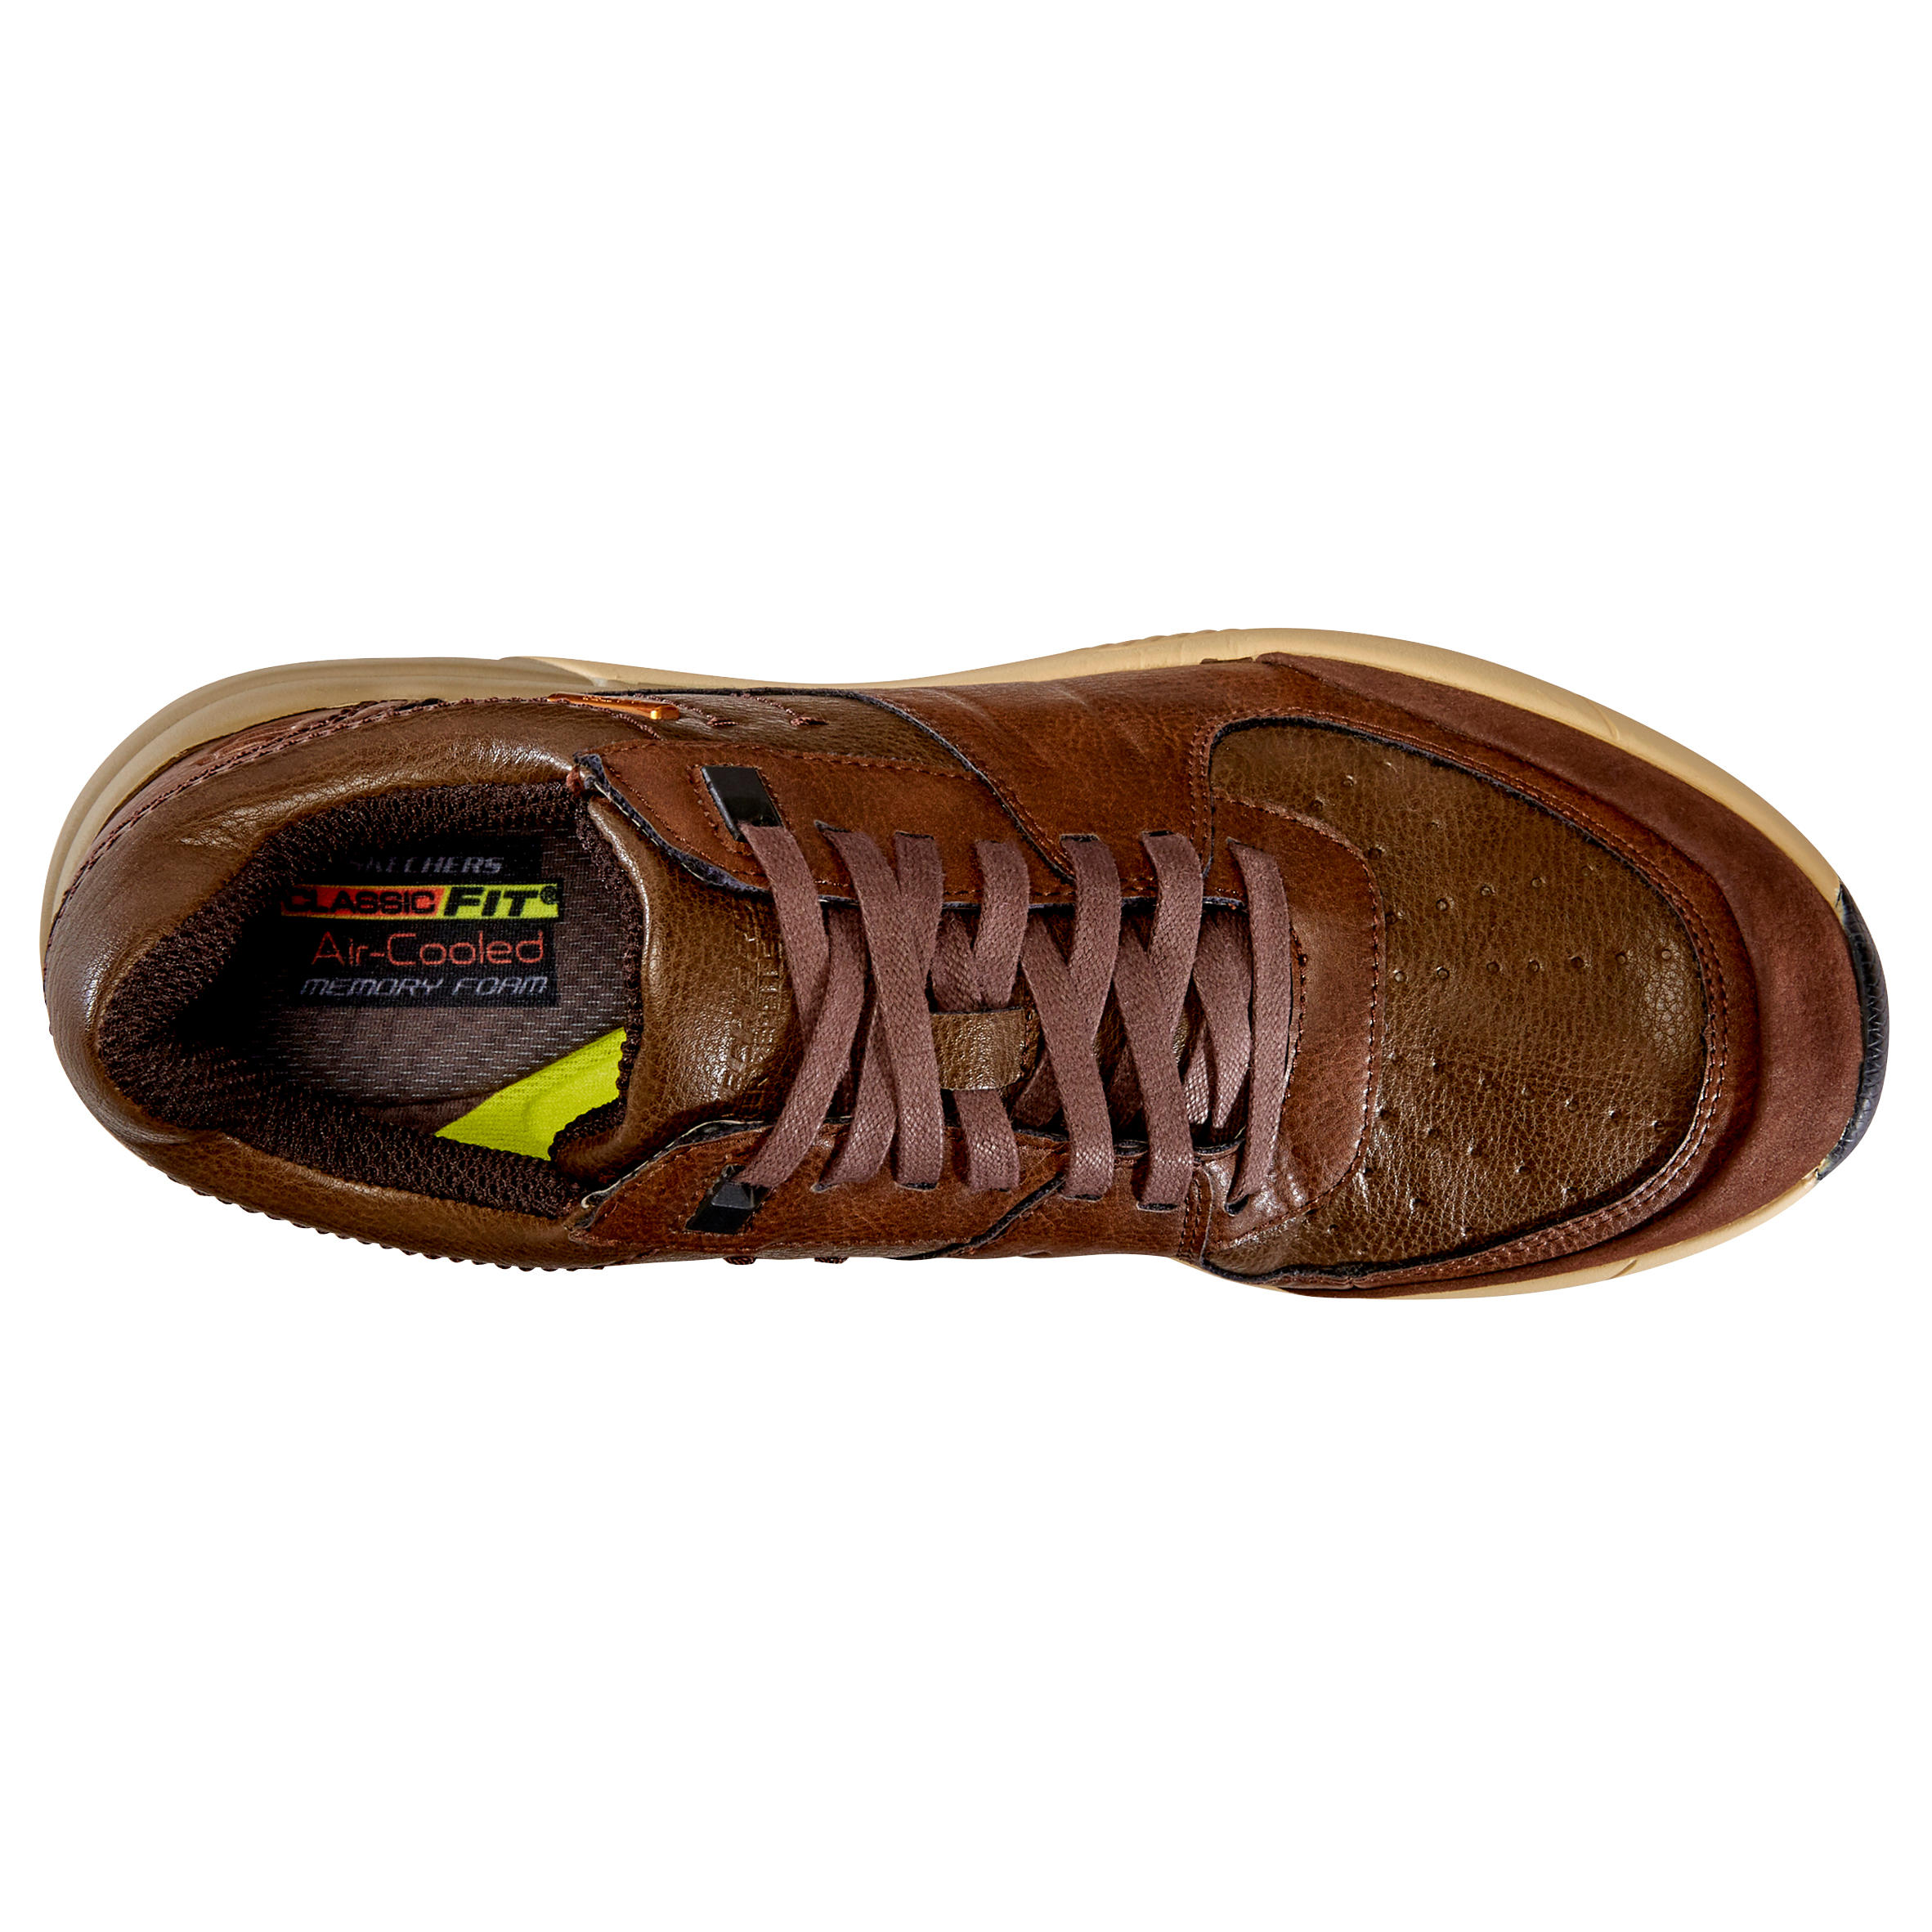 skechers brown shoes